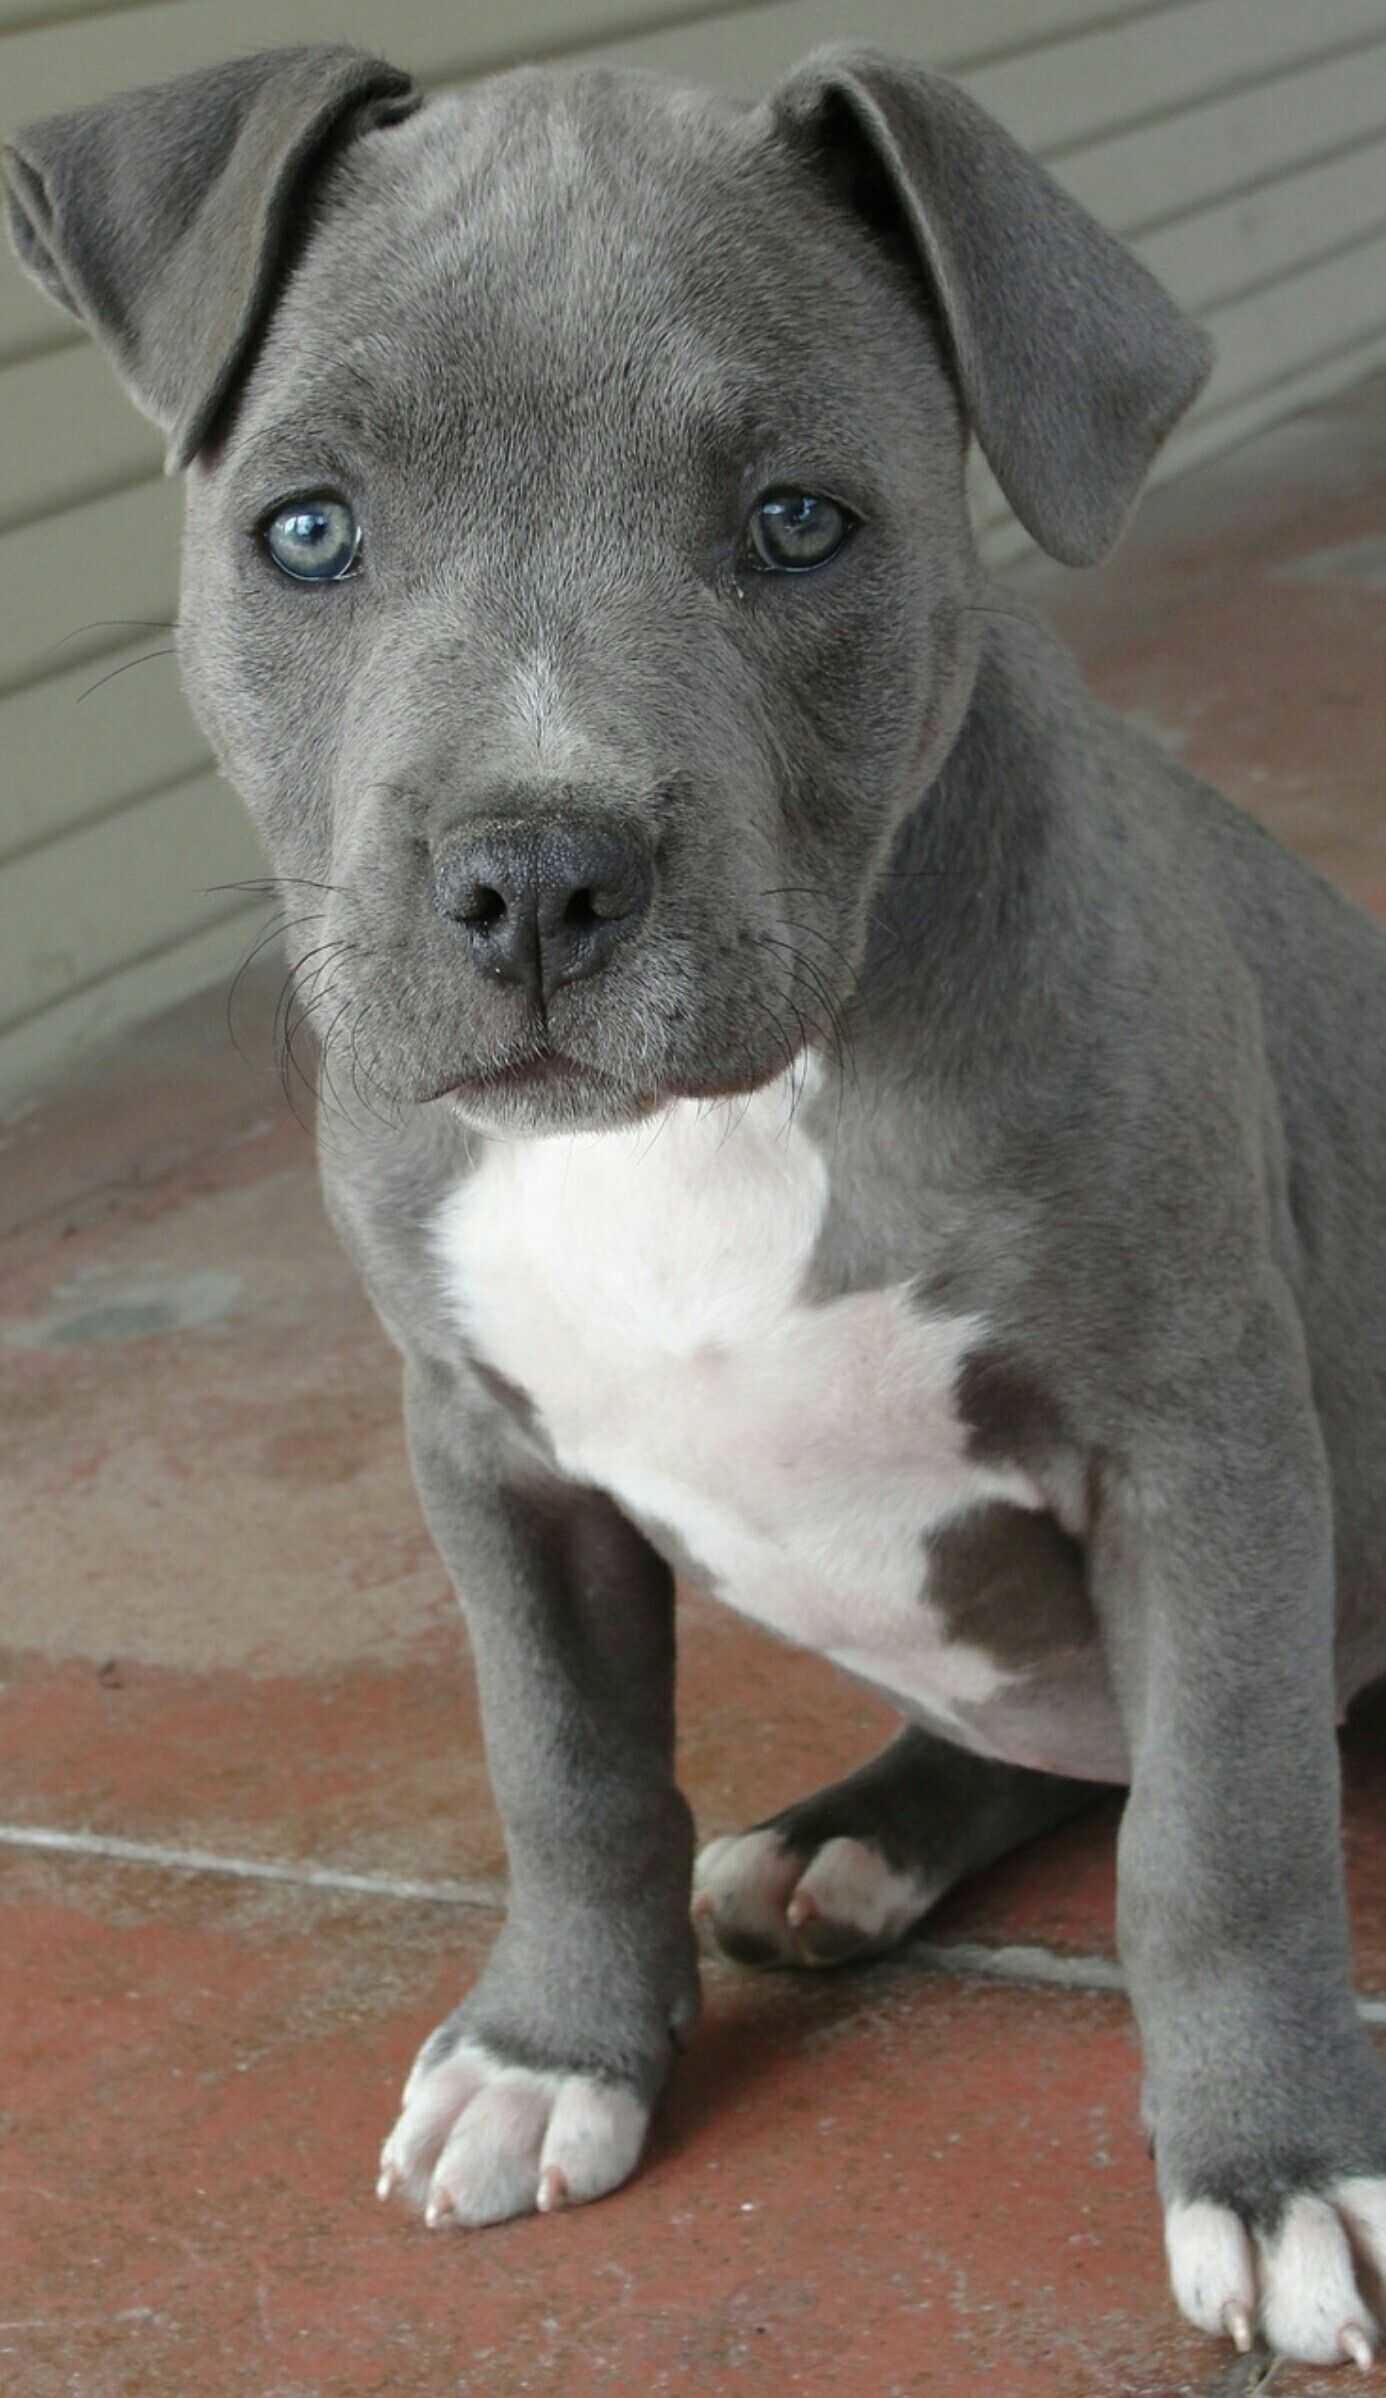 blue nose baby pitbull